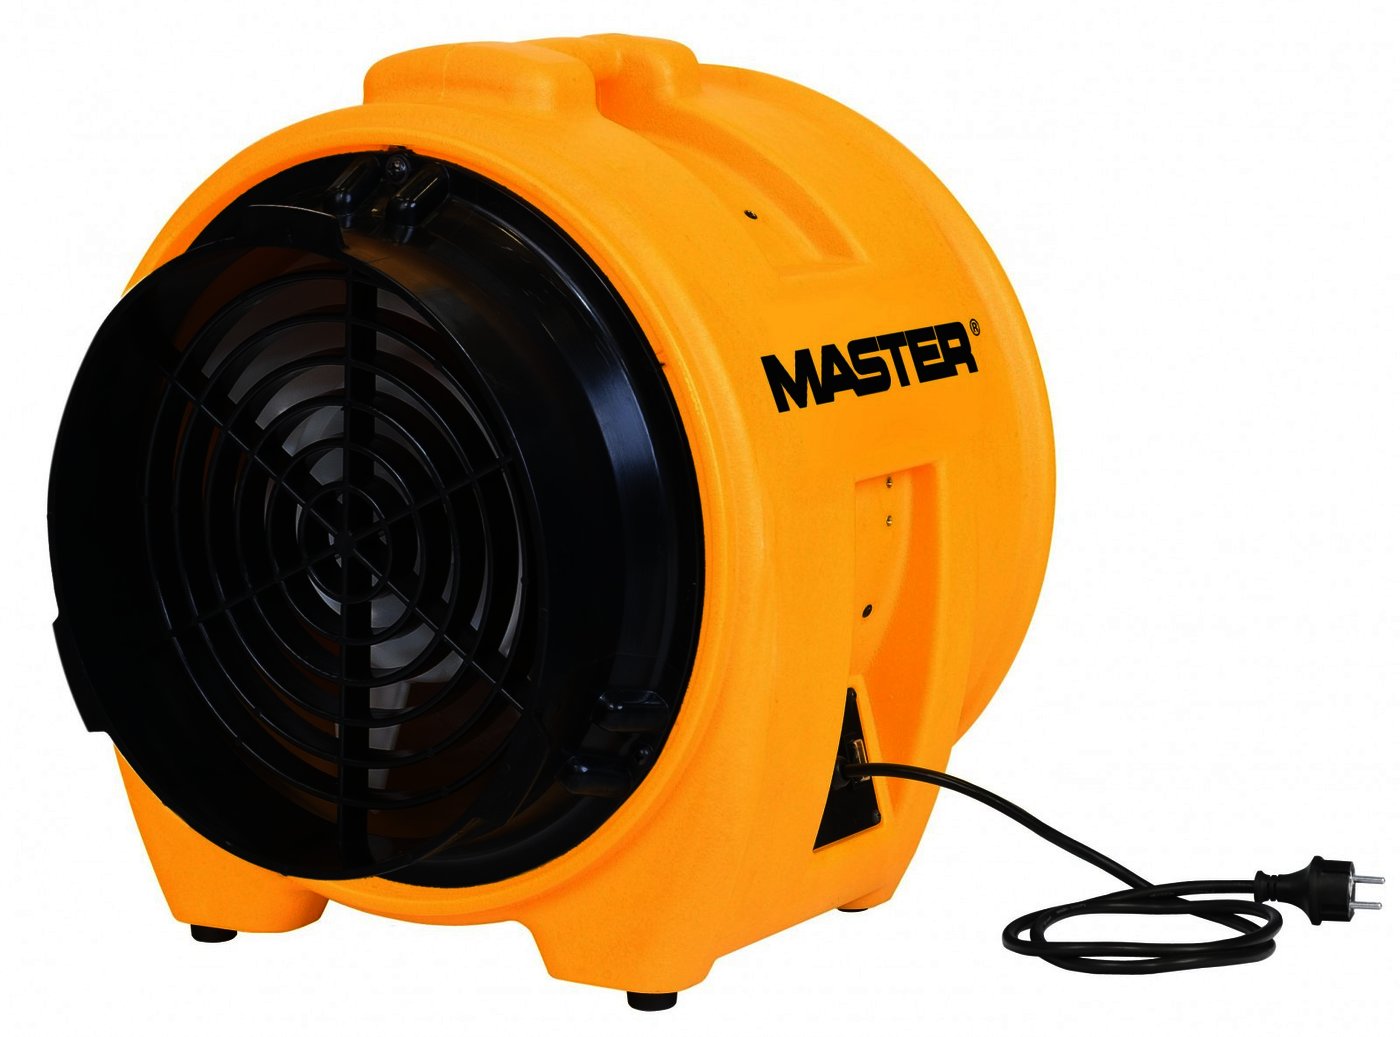 Вентилятор Master BL8800 750 Вт 7800 м³/ч ᐉ купить артикул BL8800 в Киеве - супер-цена на запчасть – от 10697 грн. – интернет-магазин Strument (Украина)